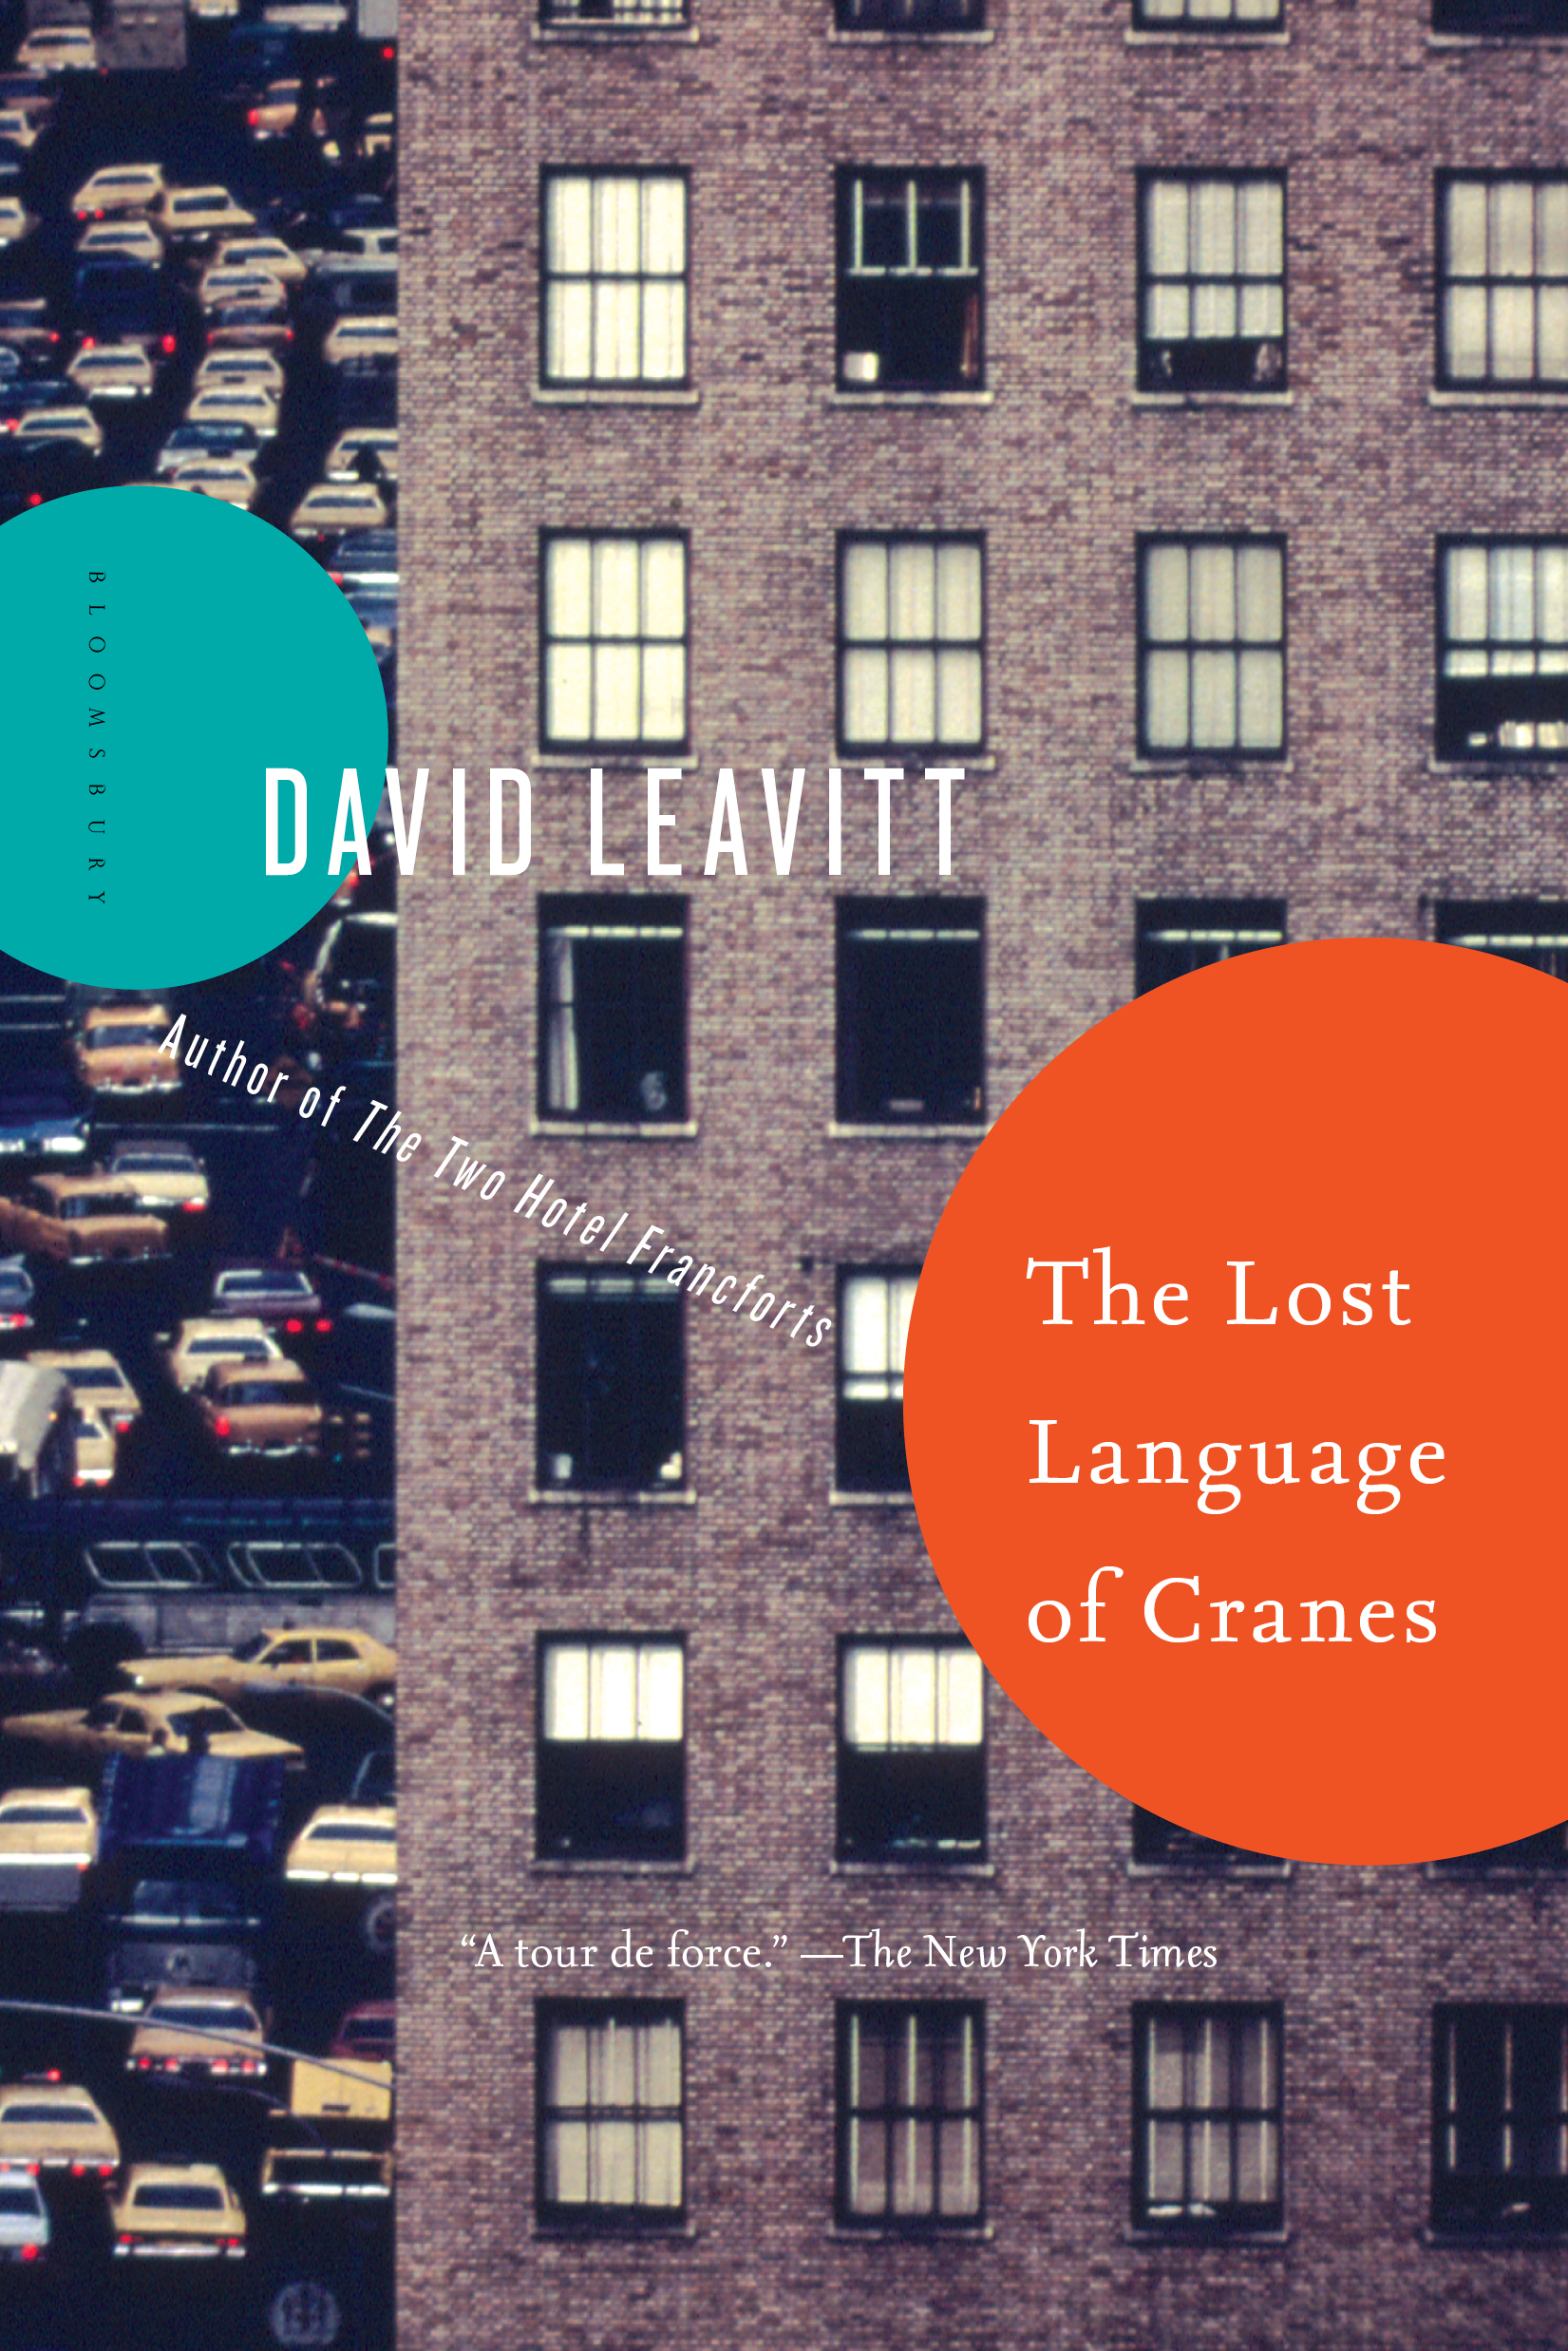 THE LOST LANGUAGE OF CRANES